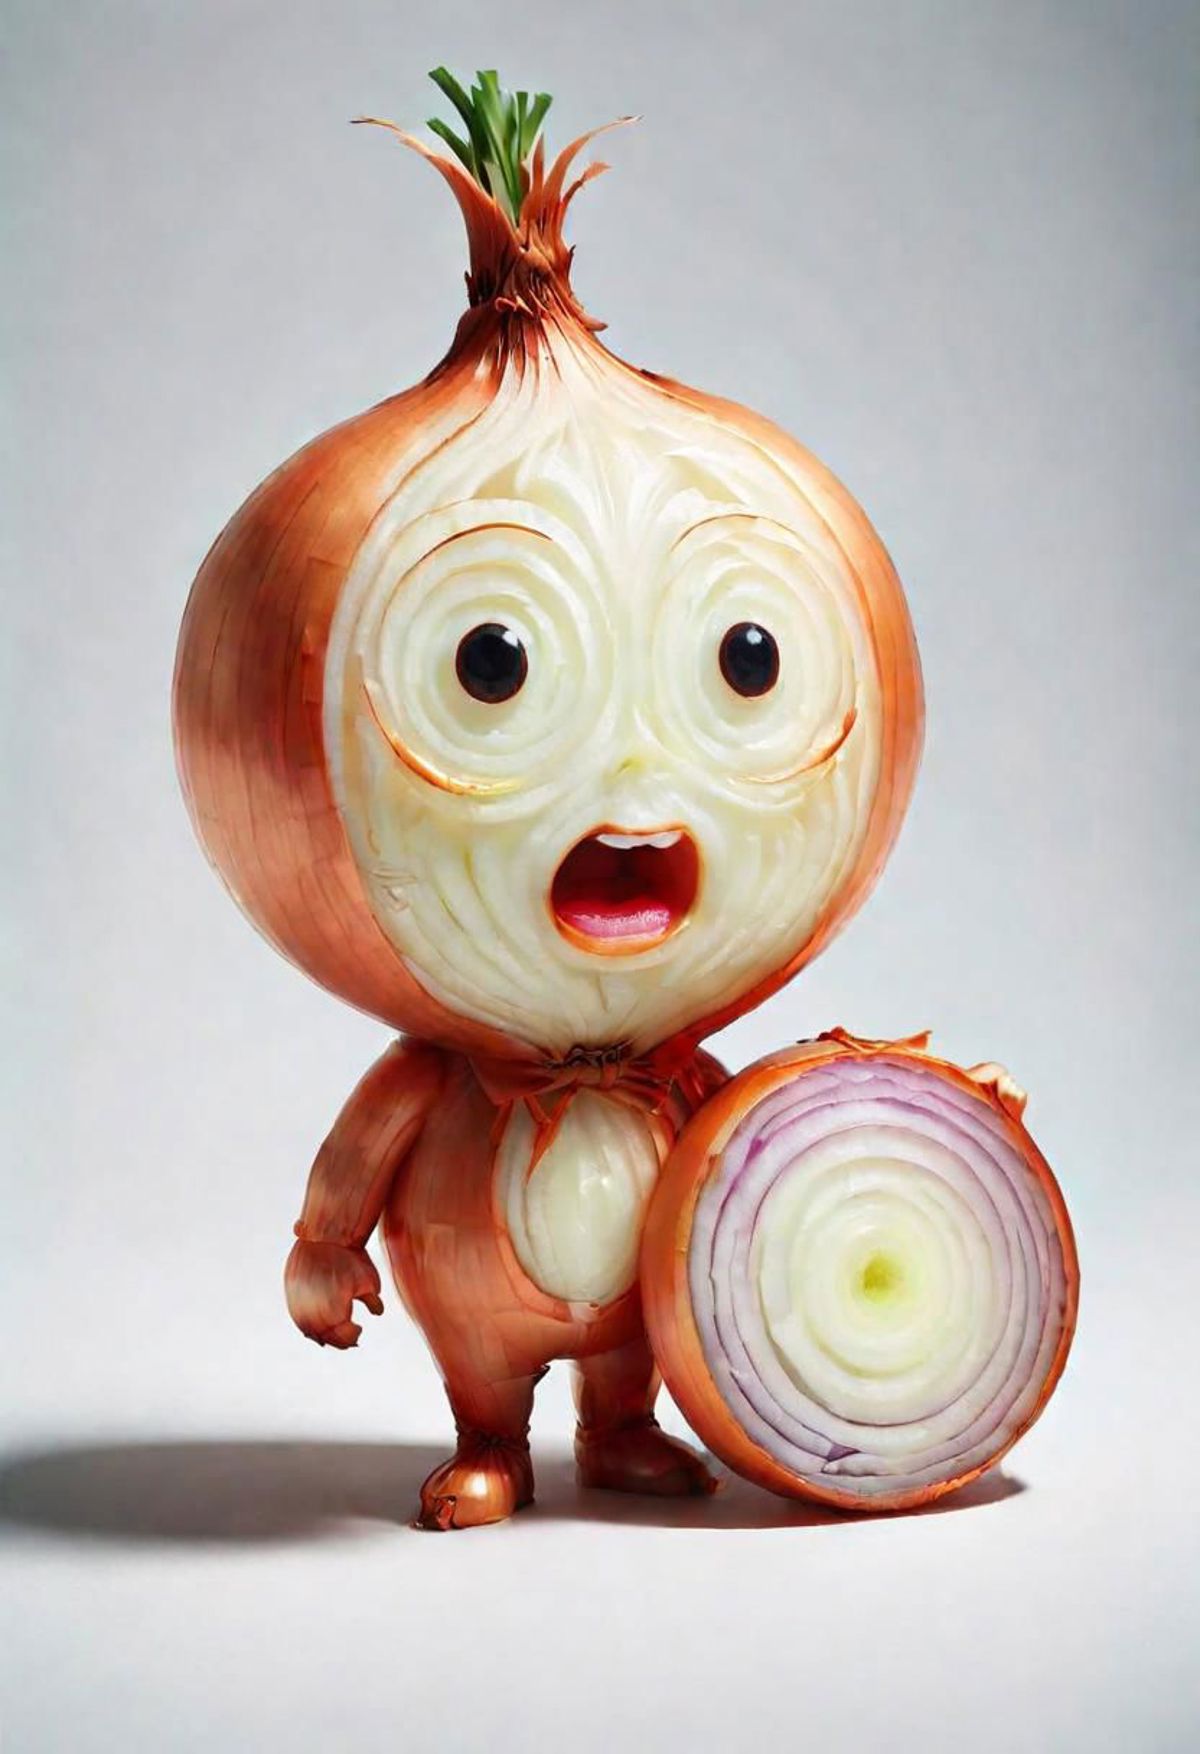 A creepy onion baby holding a giant onion.